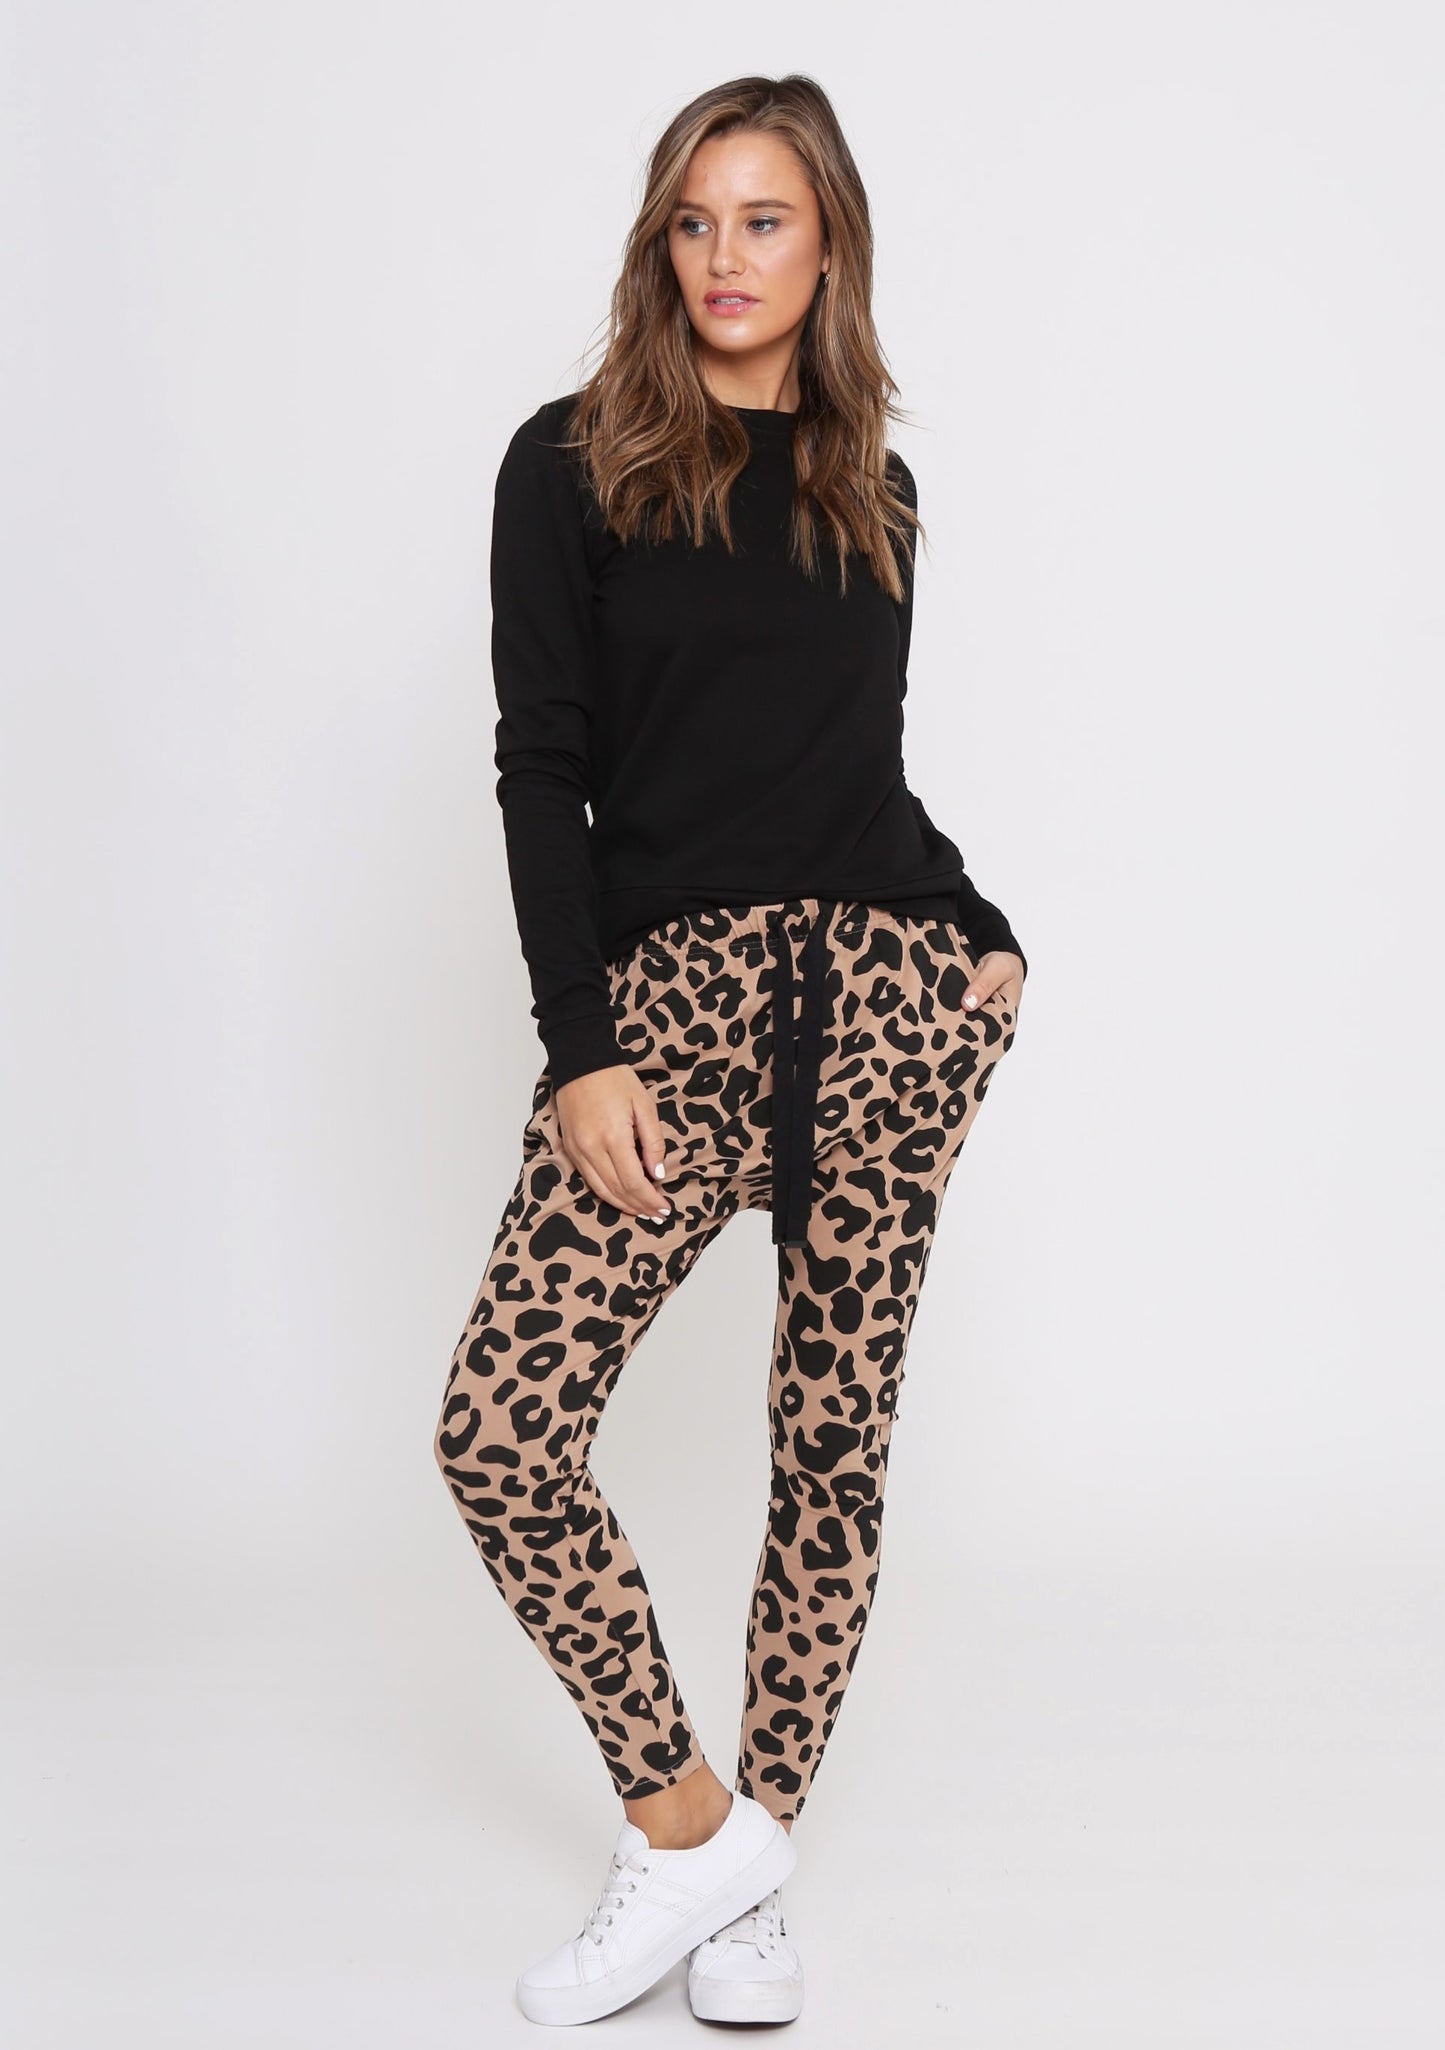 tan camel coloured leopard print jogger pants super comfy style